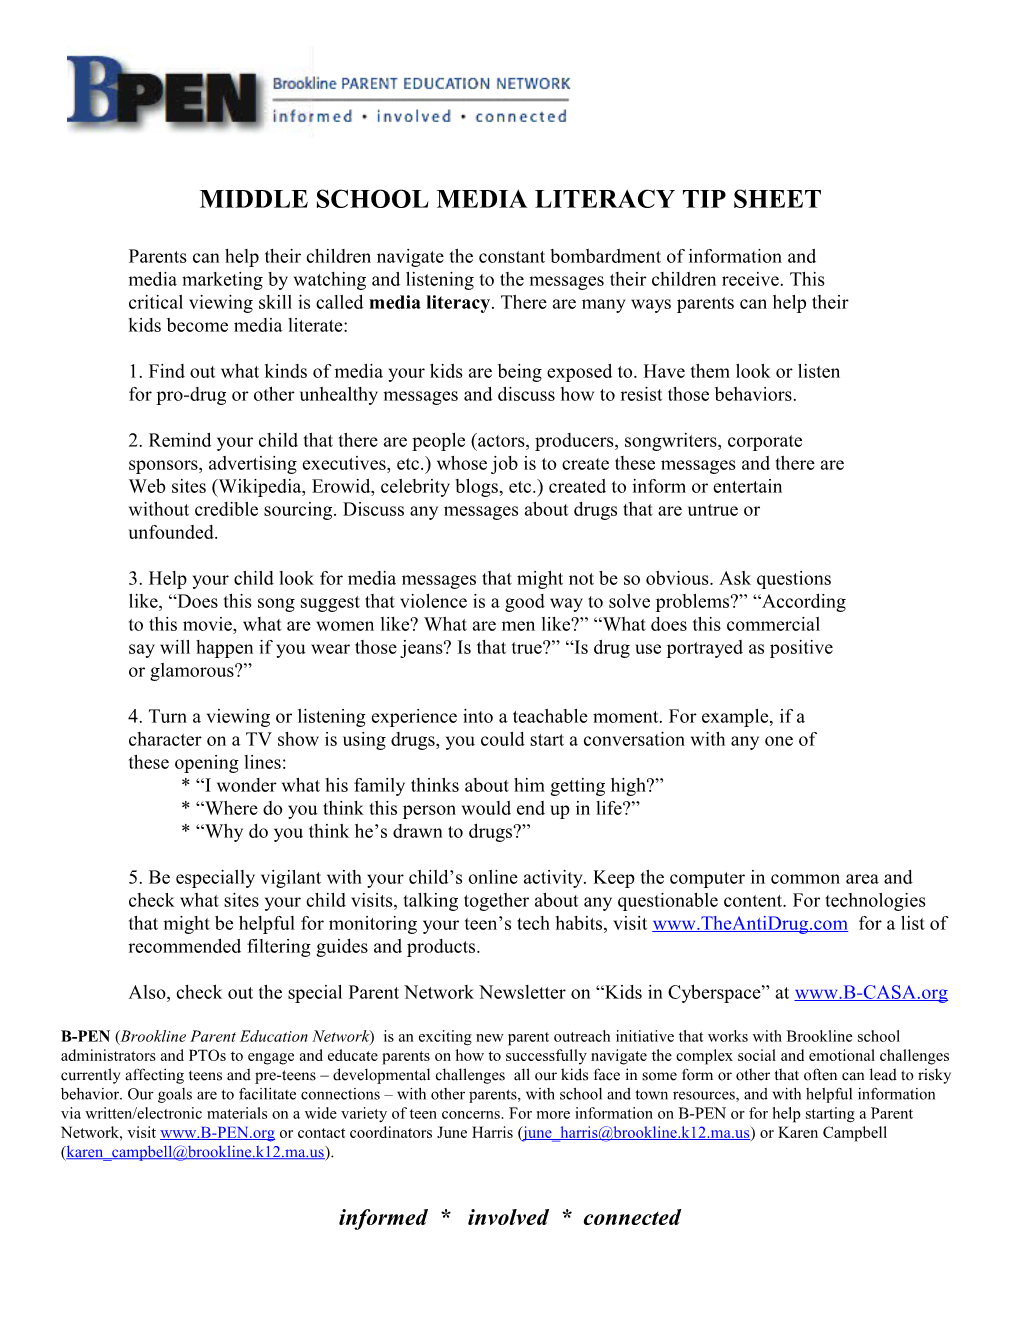 Middle School Media Literacy Tip Sheet